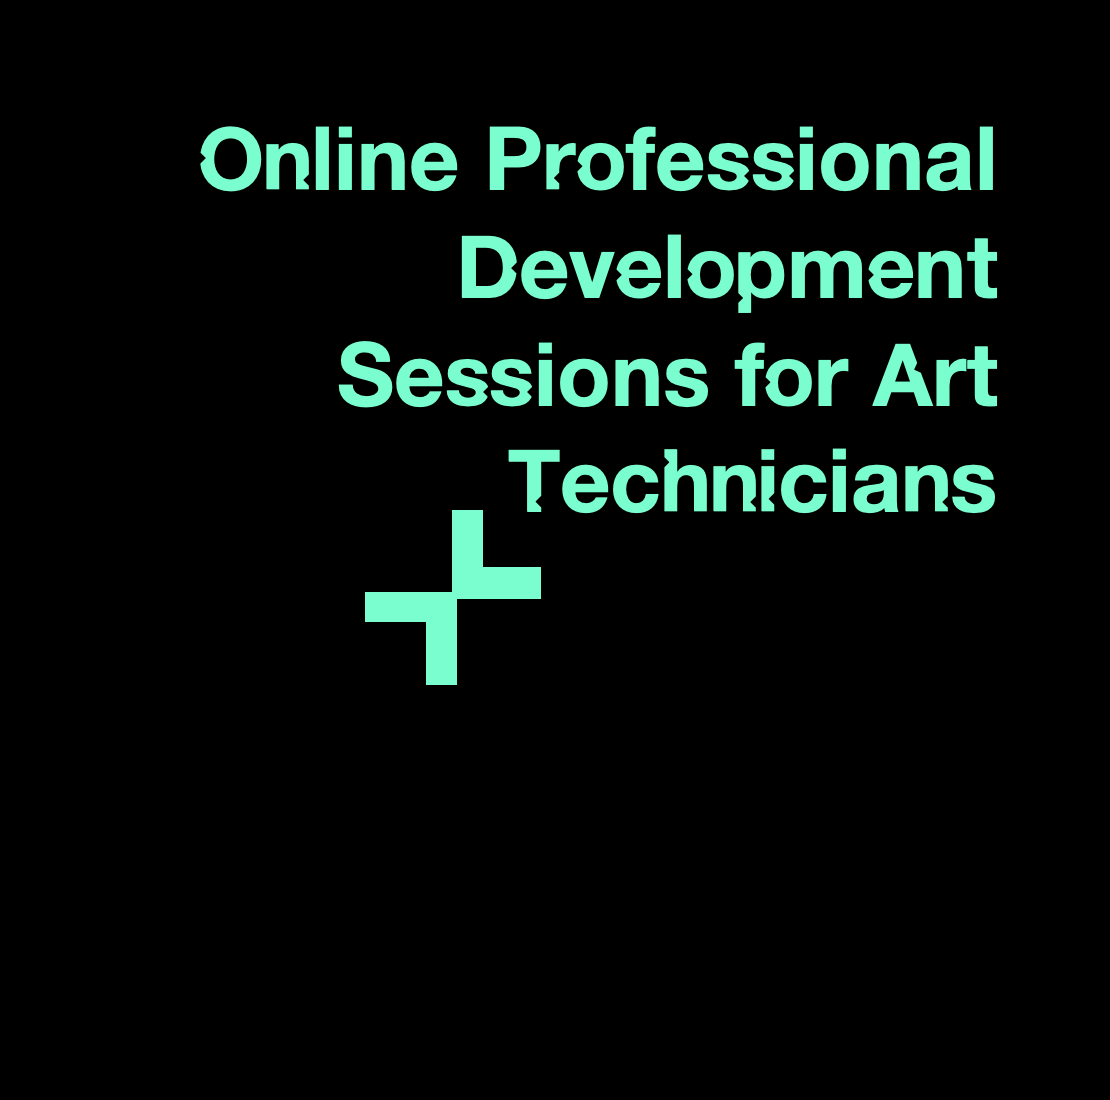 Online Professional Development Sessions for Art Technicians